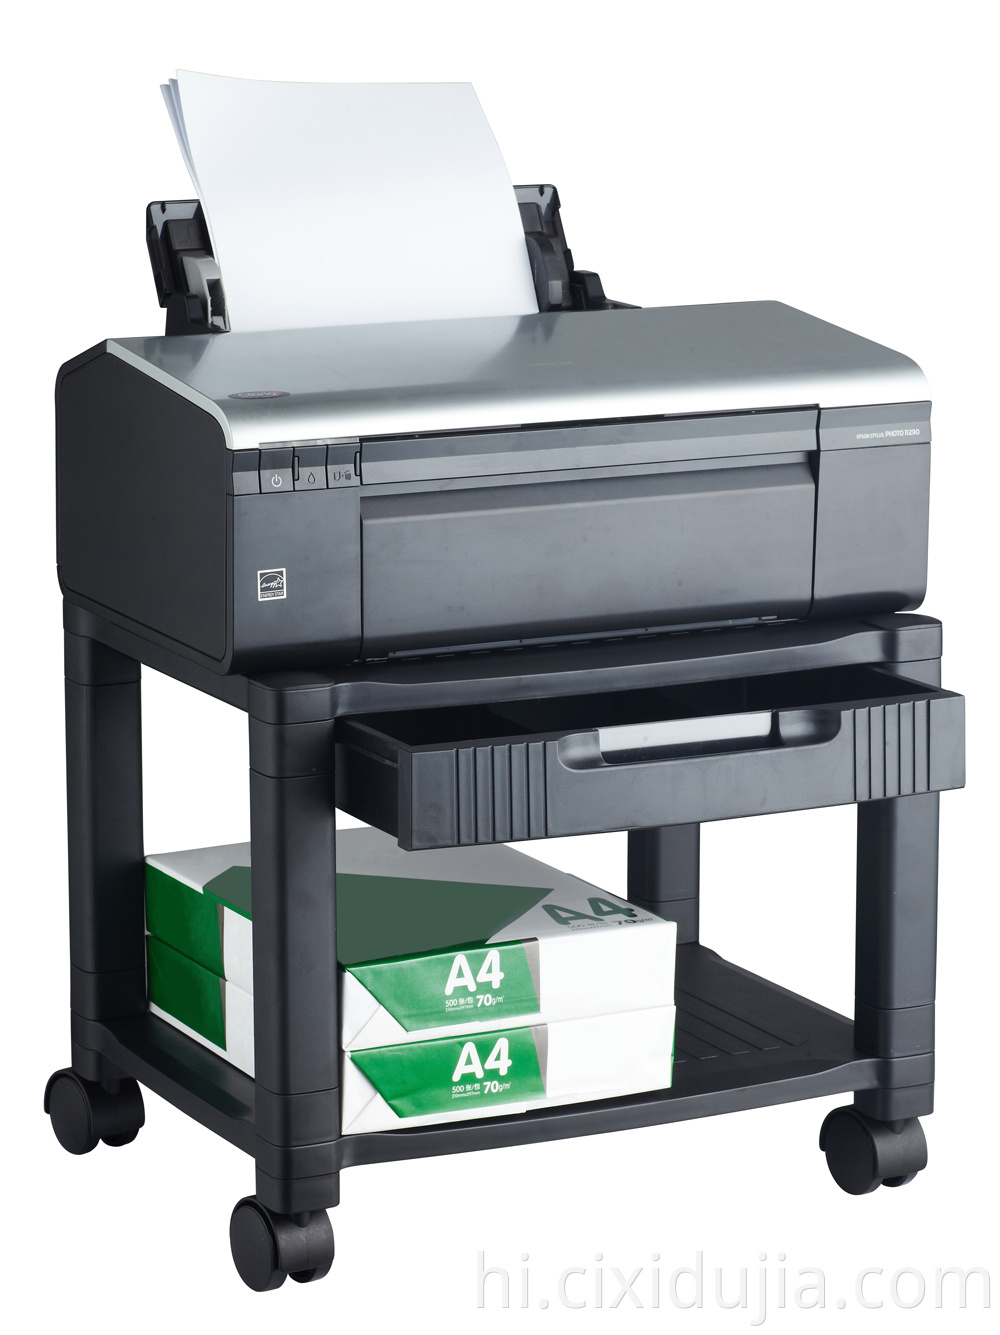 printer stand with Drawer Organizer